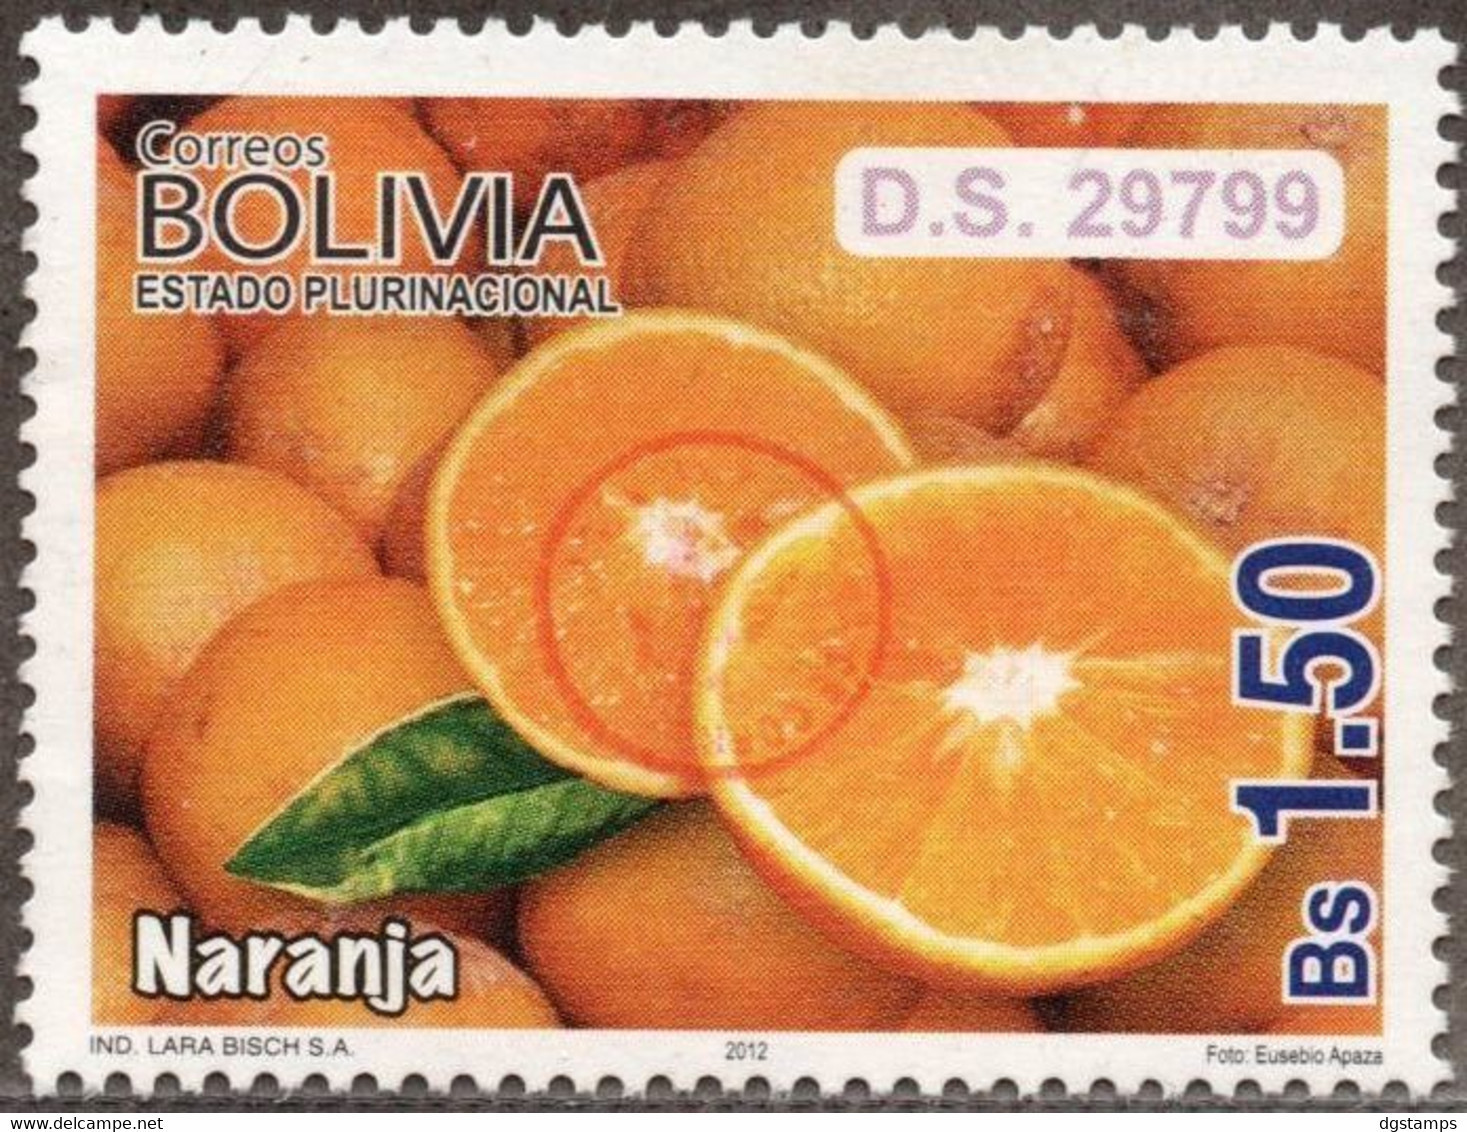 Bolivia 2018 **  CEFIBOL 2374B  (2012 #2126) Export Fruits: Oranges, Authorized For The Bolivian Post Office. - Bolivia